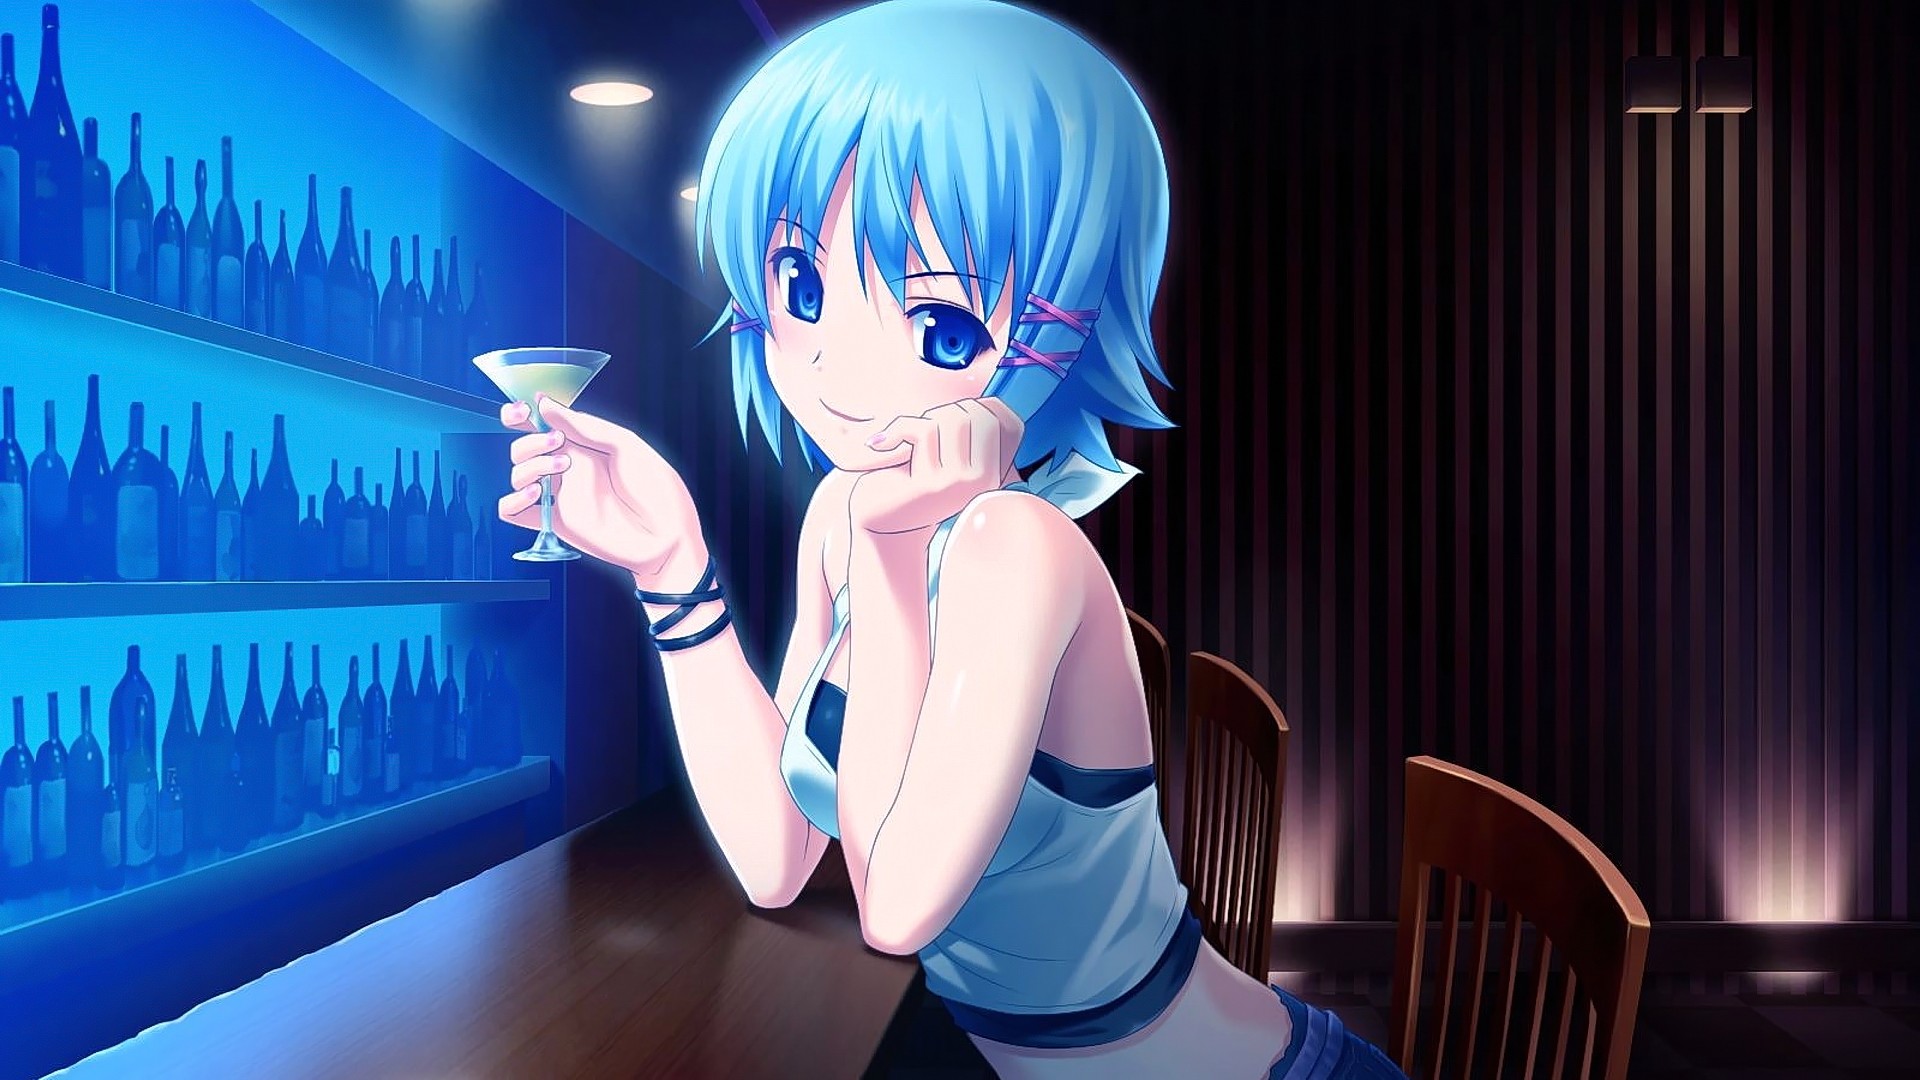 Anime 1920x1080 anime anime girls Tropical Kiss cyan hair cyan bar blue hair women indoors smiling drinking glass bottles